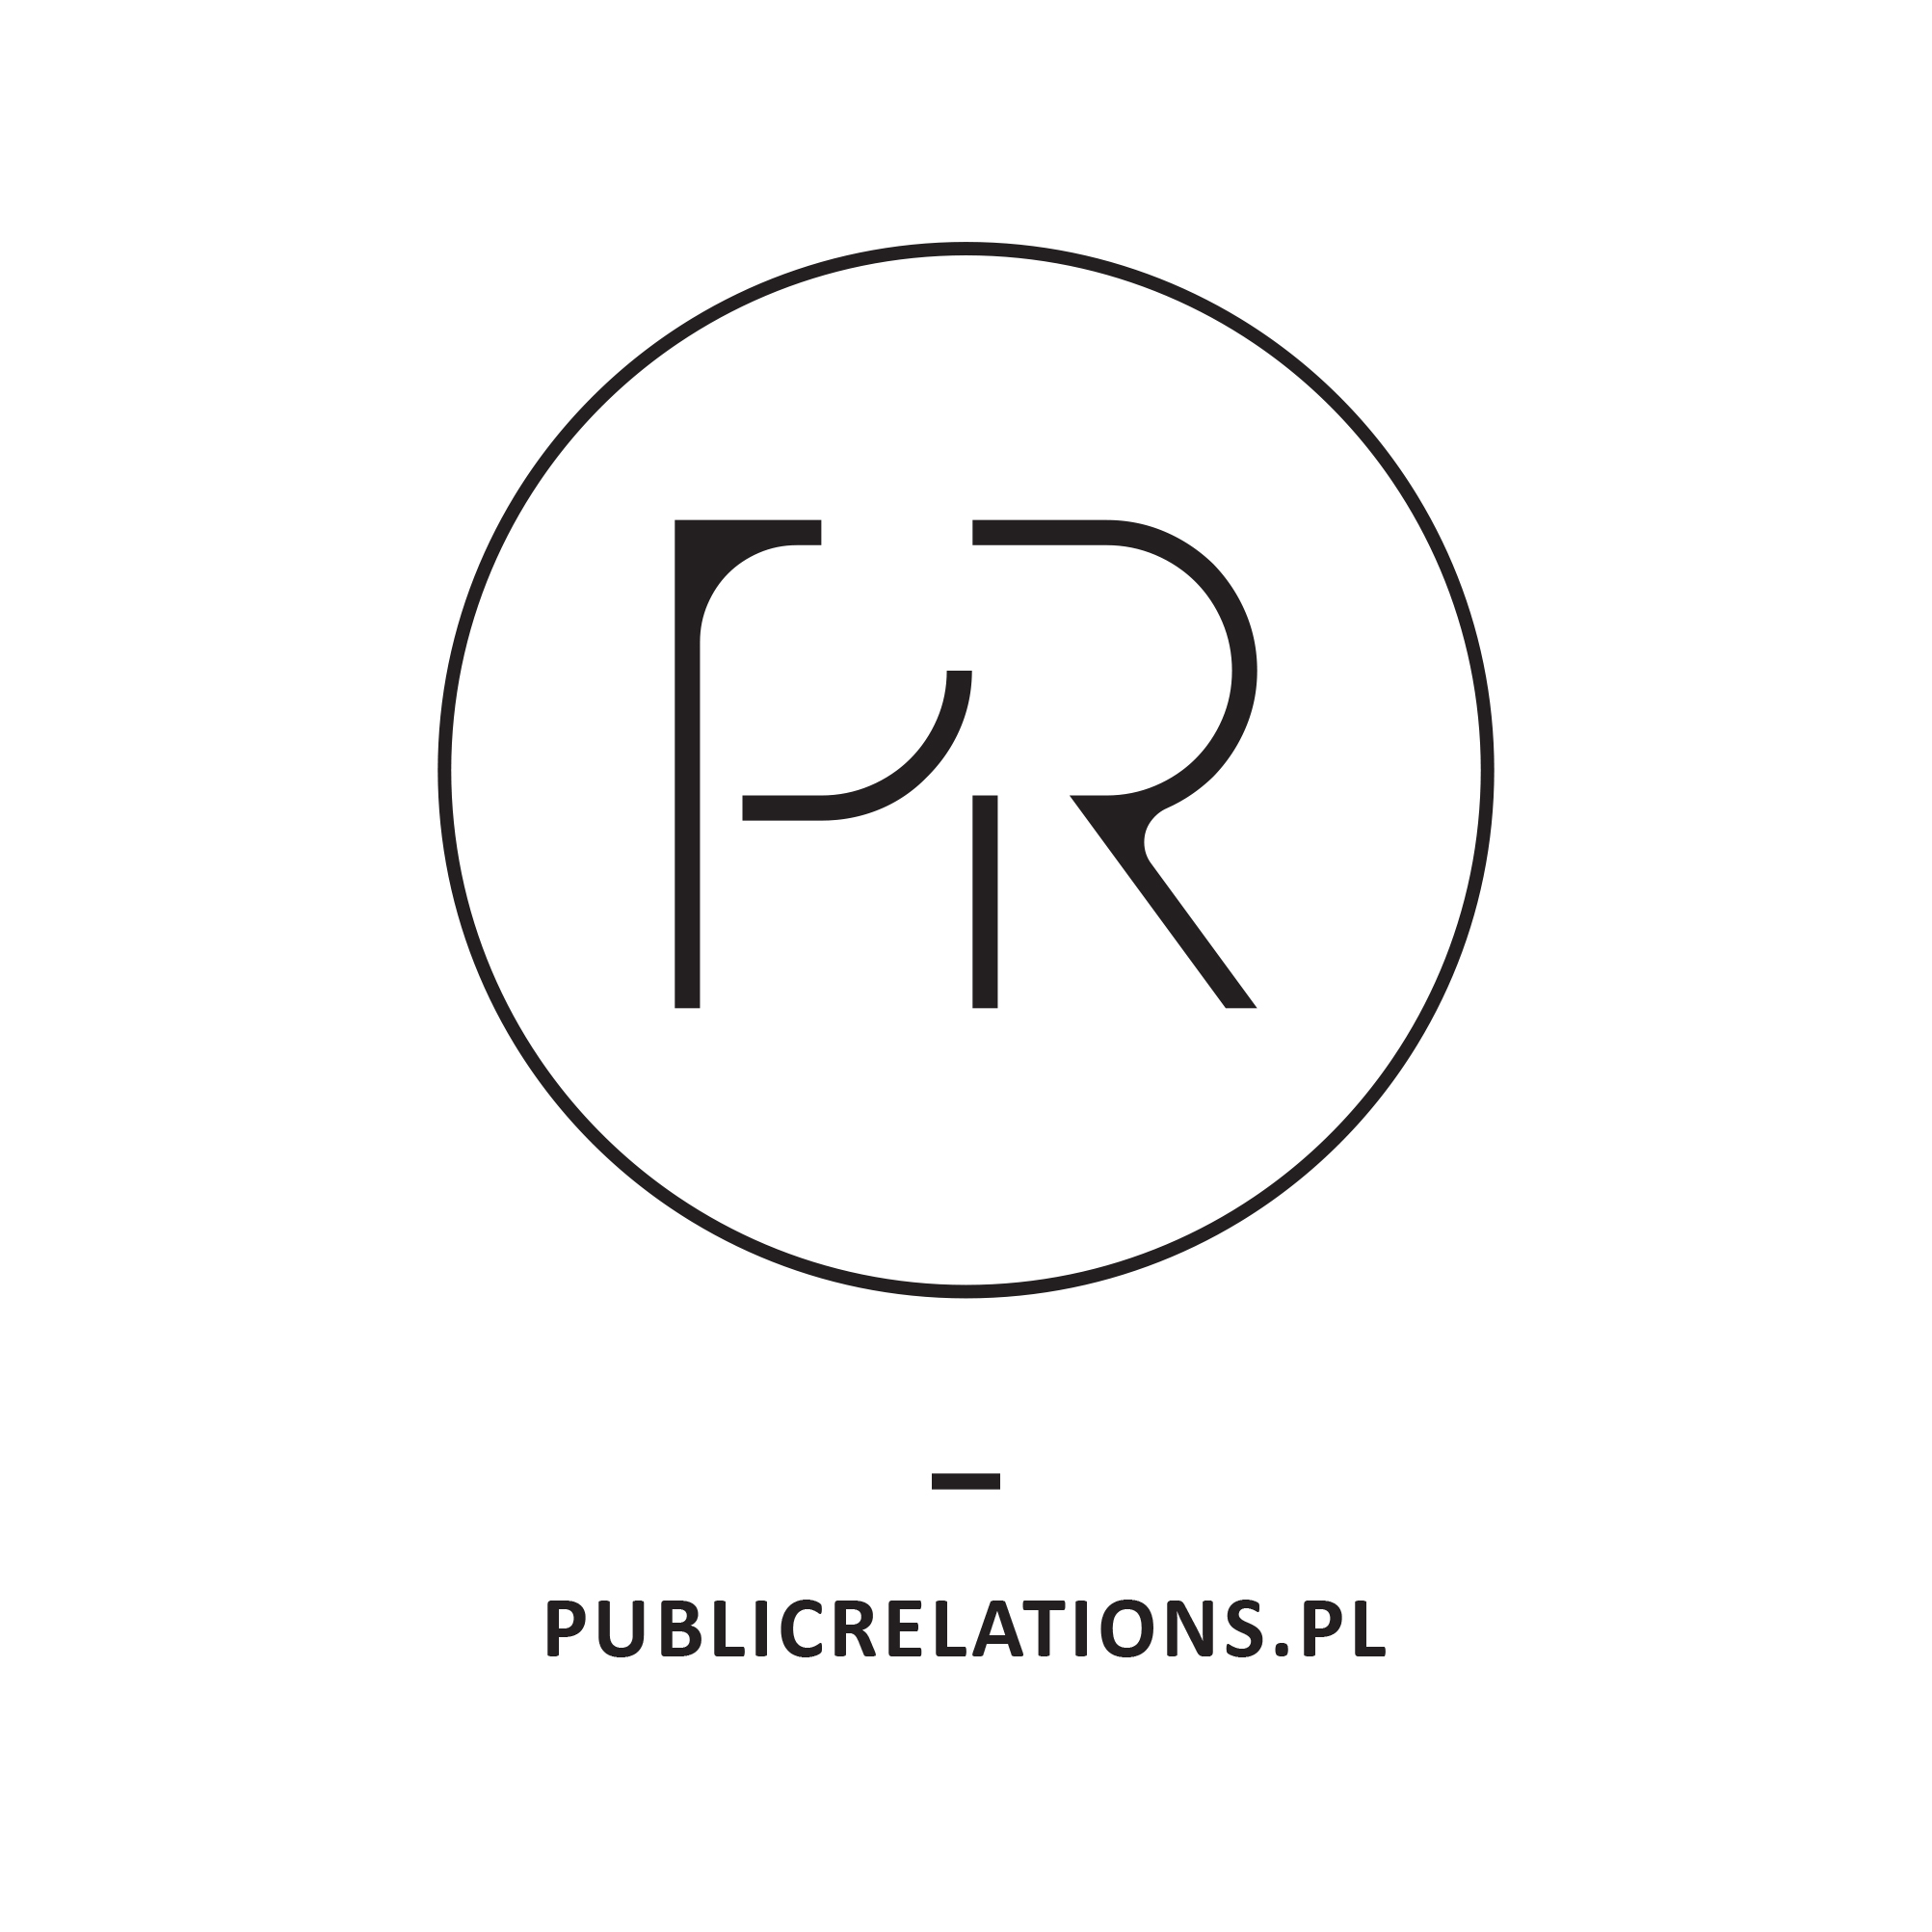 Publicrelations logo